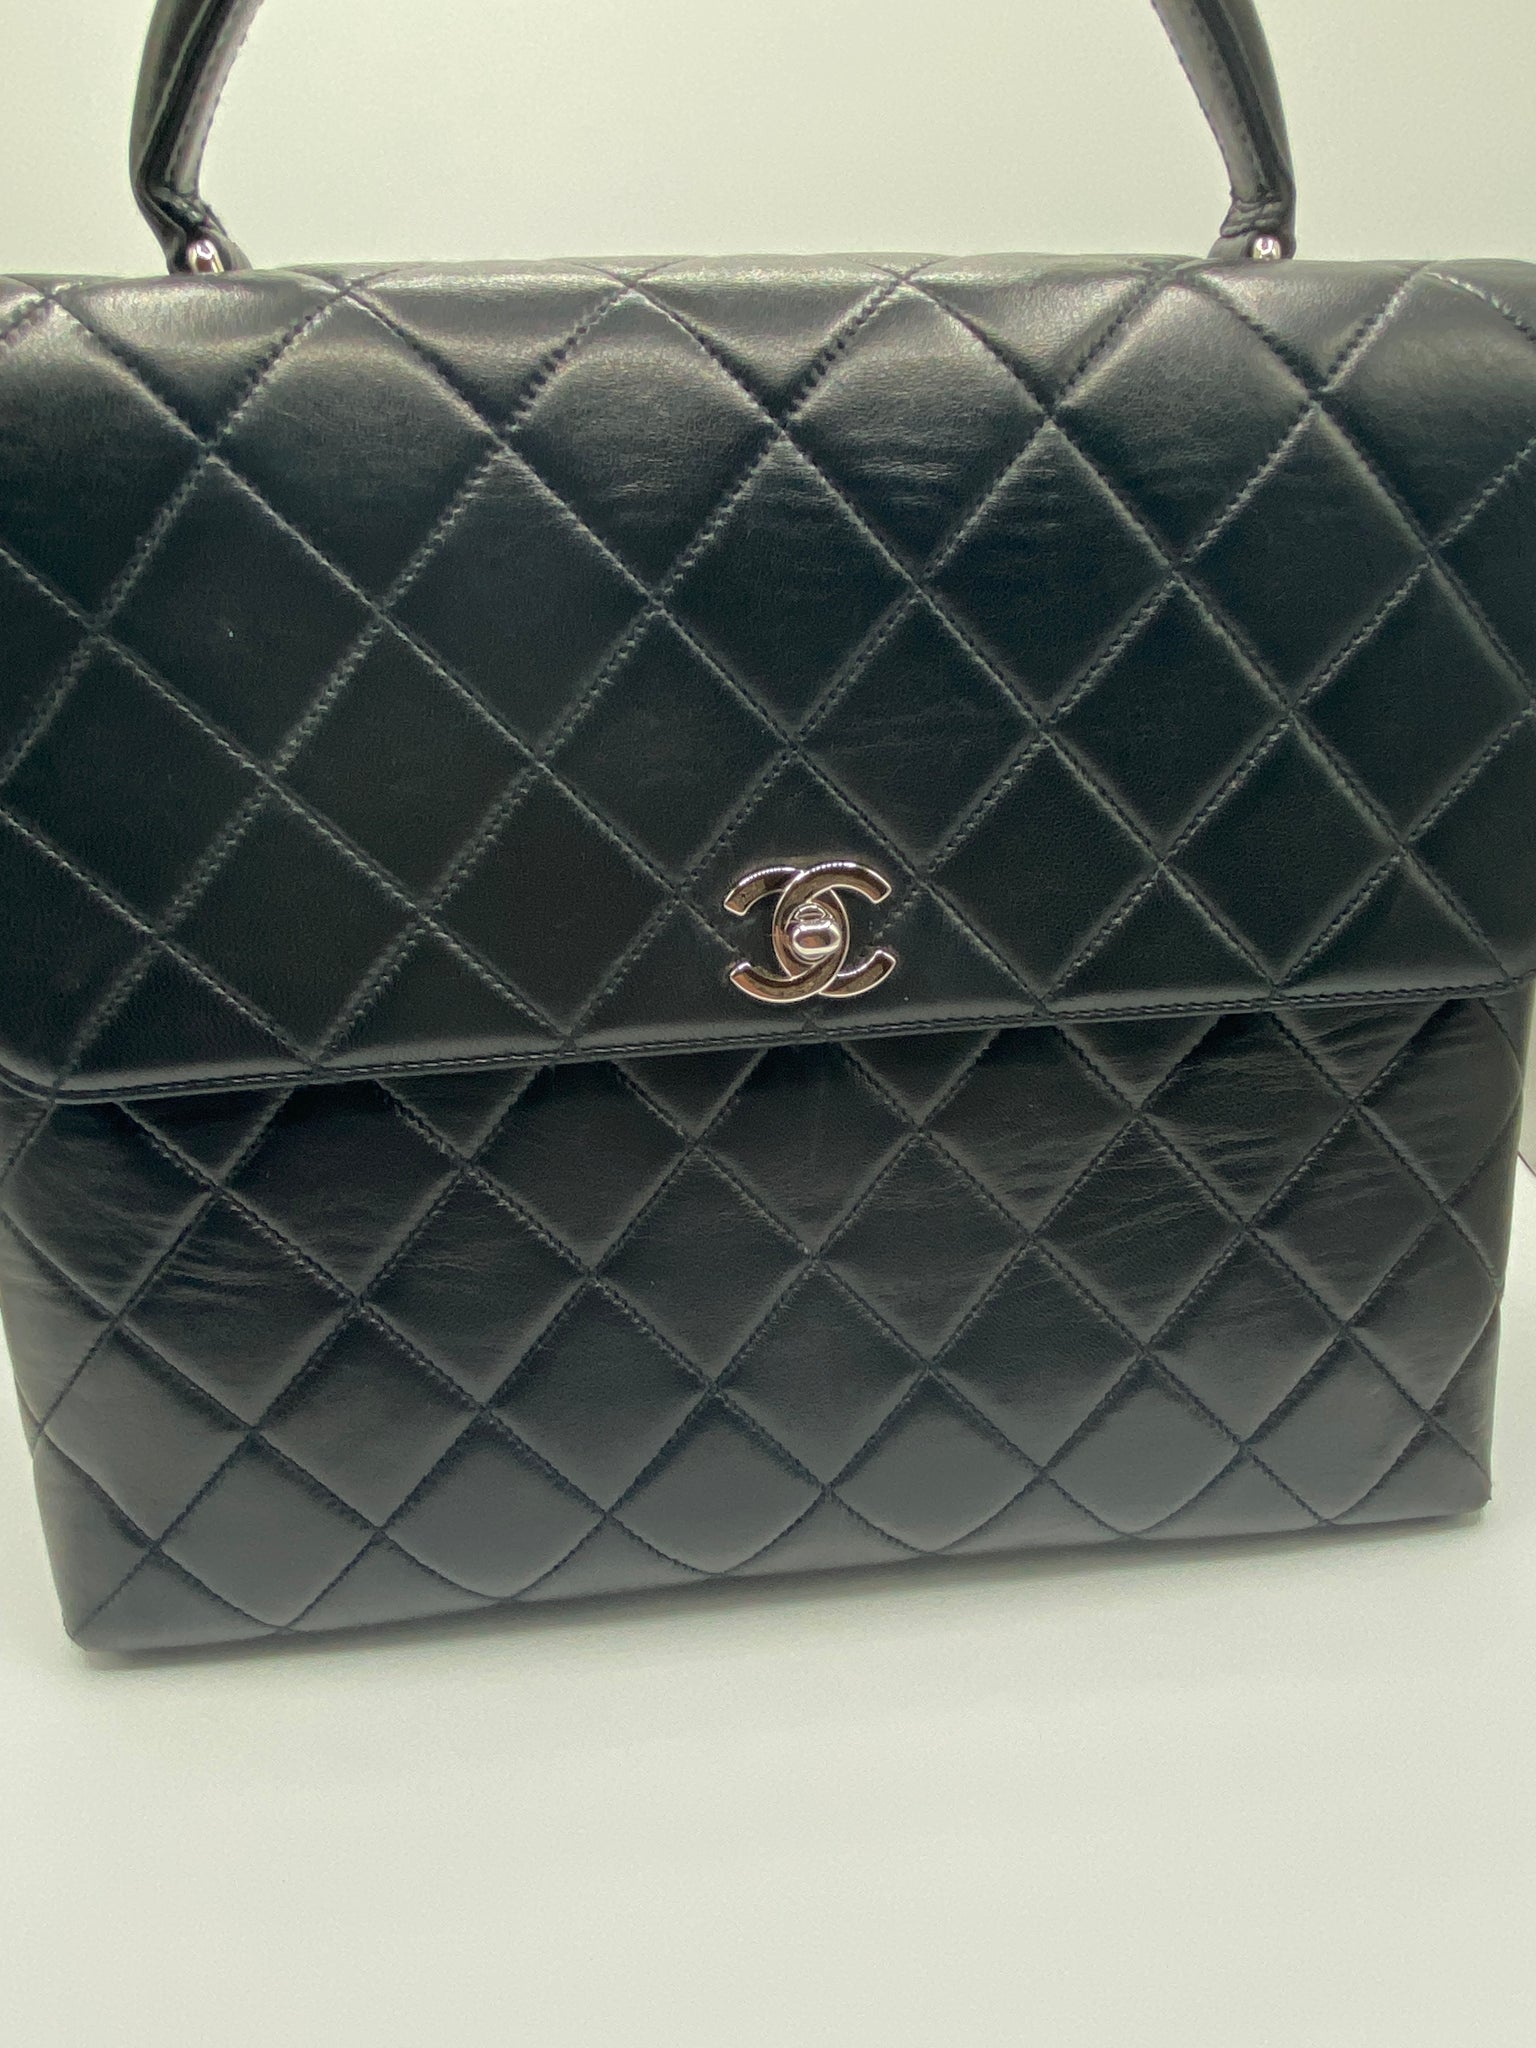 Chanel Chocolate Brown Caviar Kelly Vintage Top Handle Bag